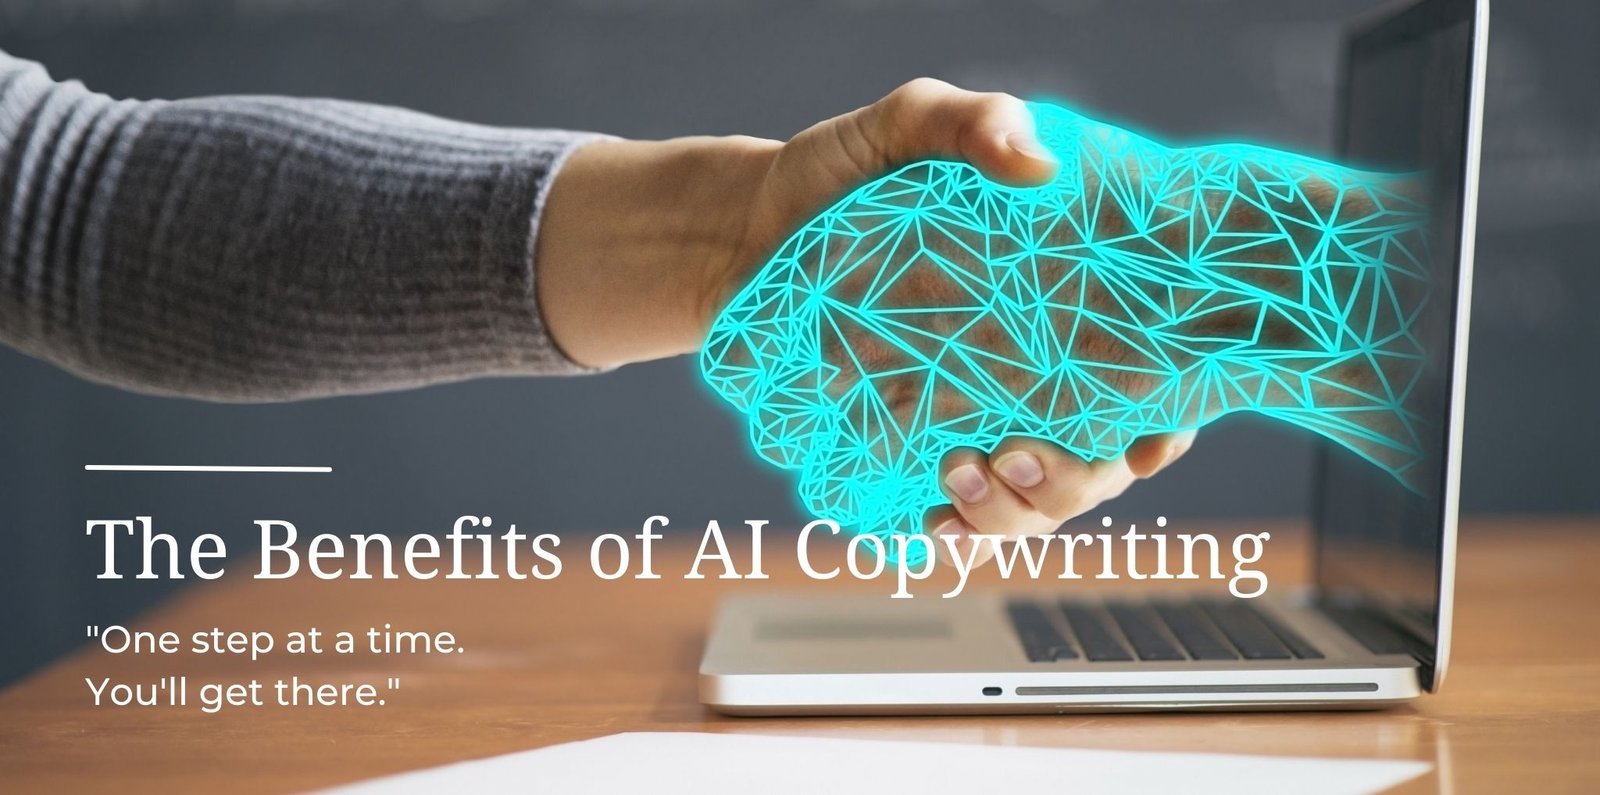 The Benefits of AI Copywriting